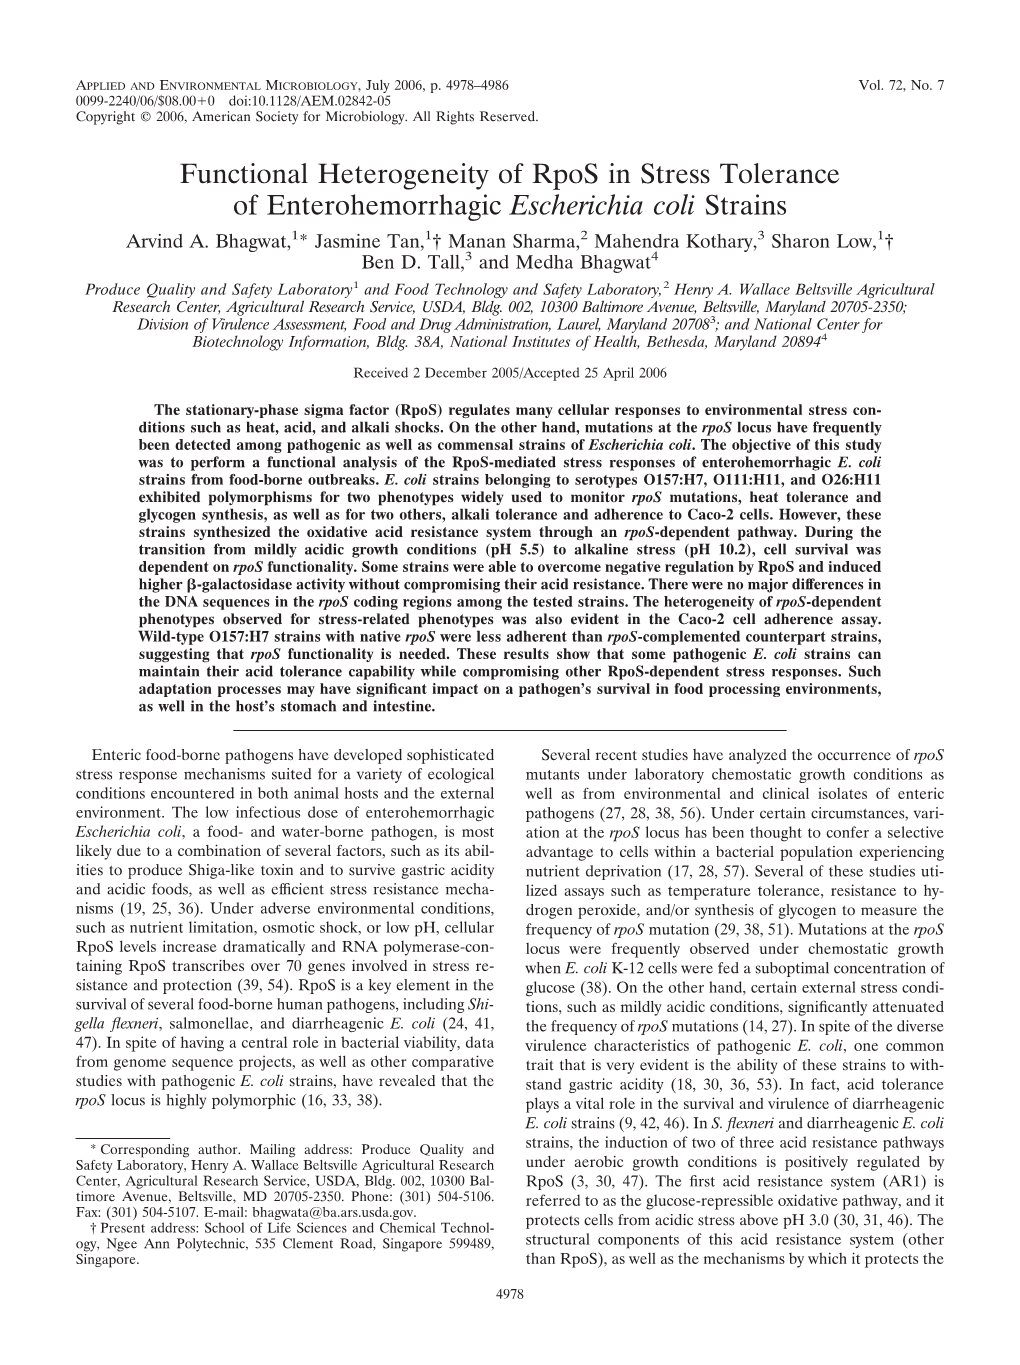 Functional Heterogeneity of Rpos in Stress Tolerance of Enterohemorrhagic Escherichia Coli Strains Arvind A